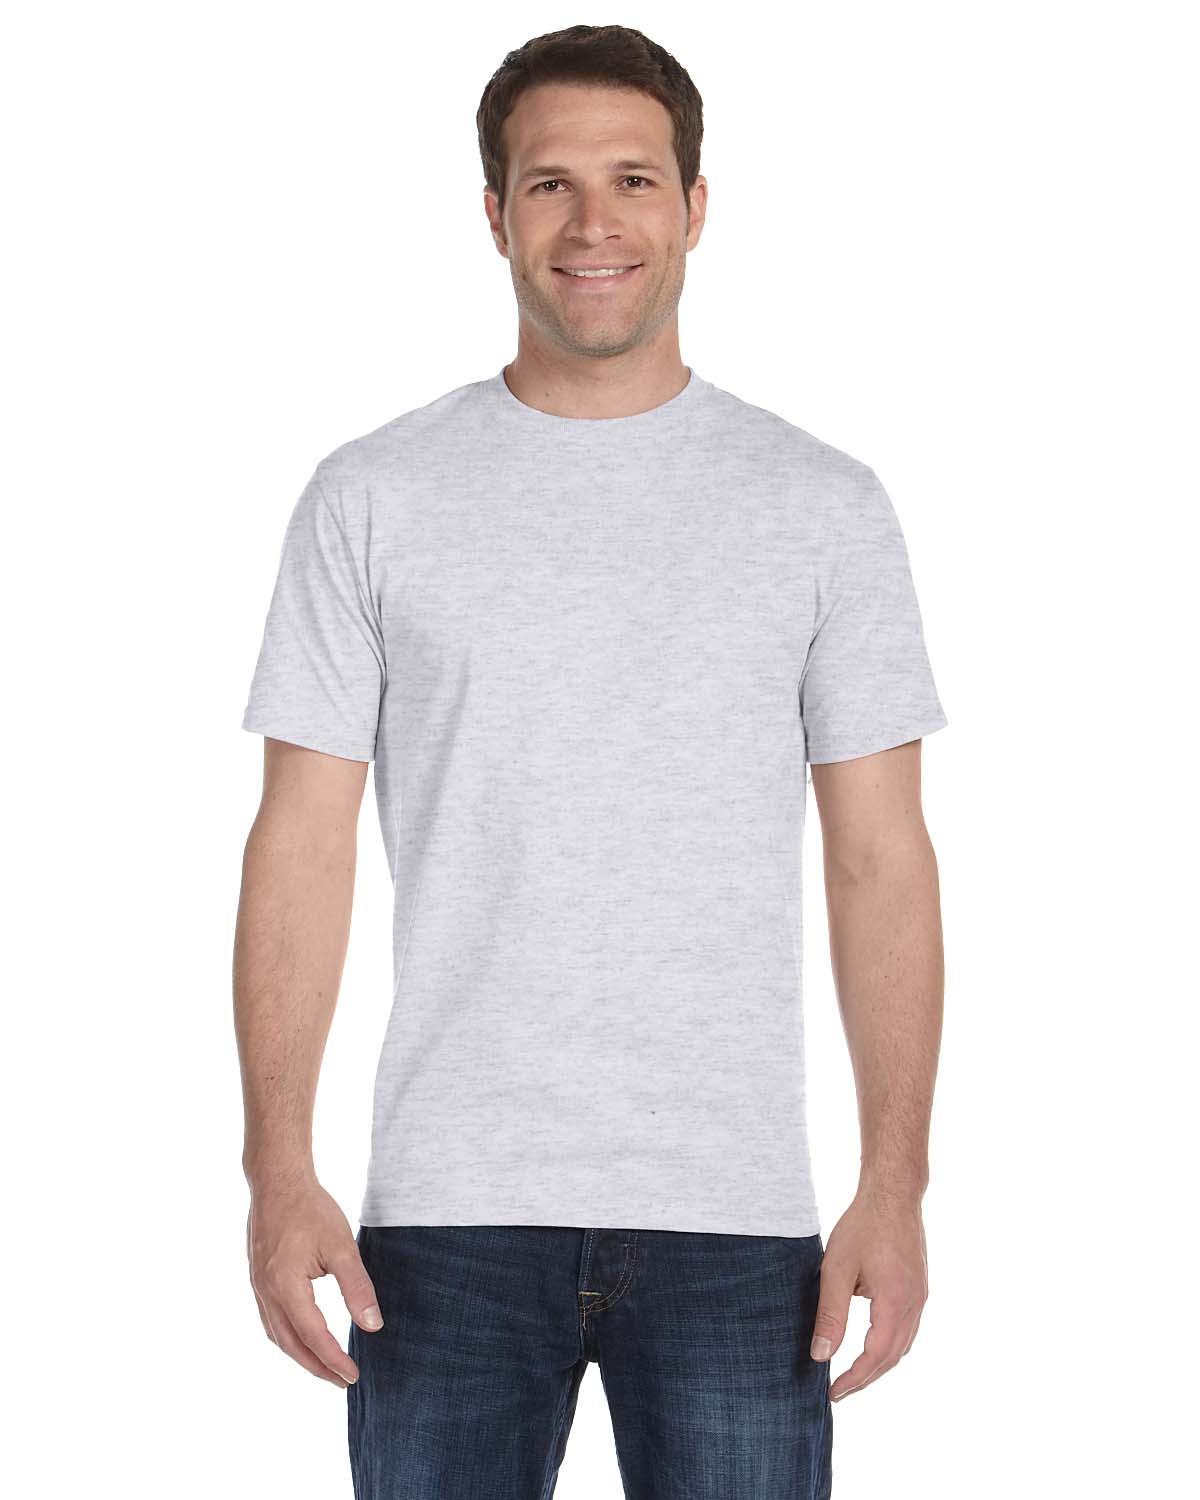 5280 Hanes 5.2 oz ComfortSoft Cotton T-Shirt Pack of 5-ORANGE 